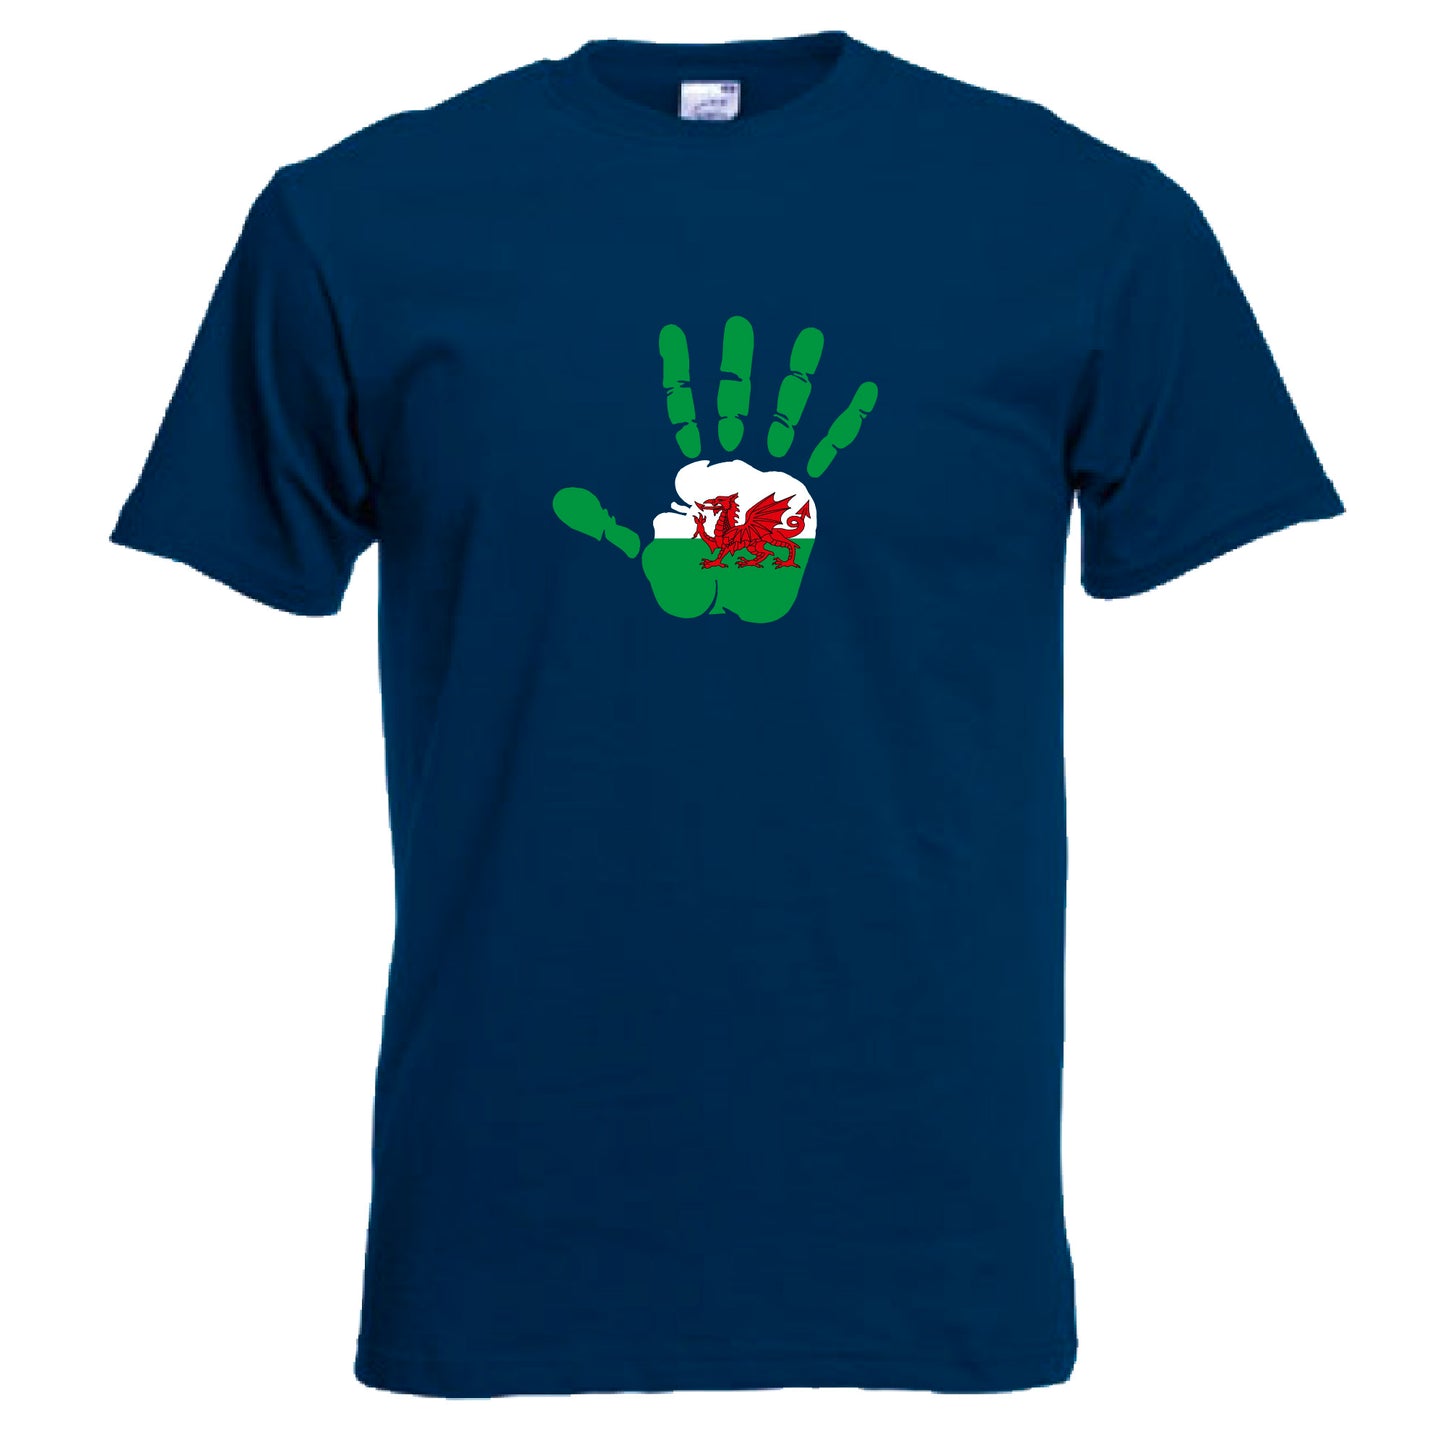 INDIGOS UG - T-Shirt Herren - Wales - Hand - Fussball